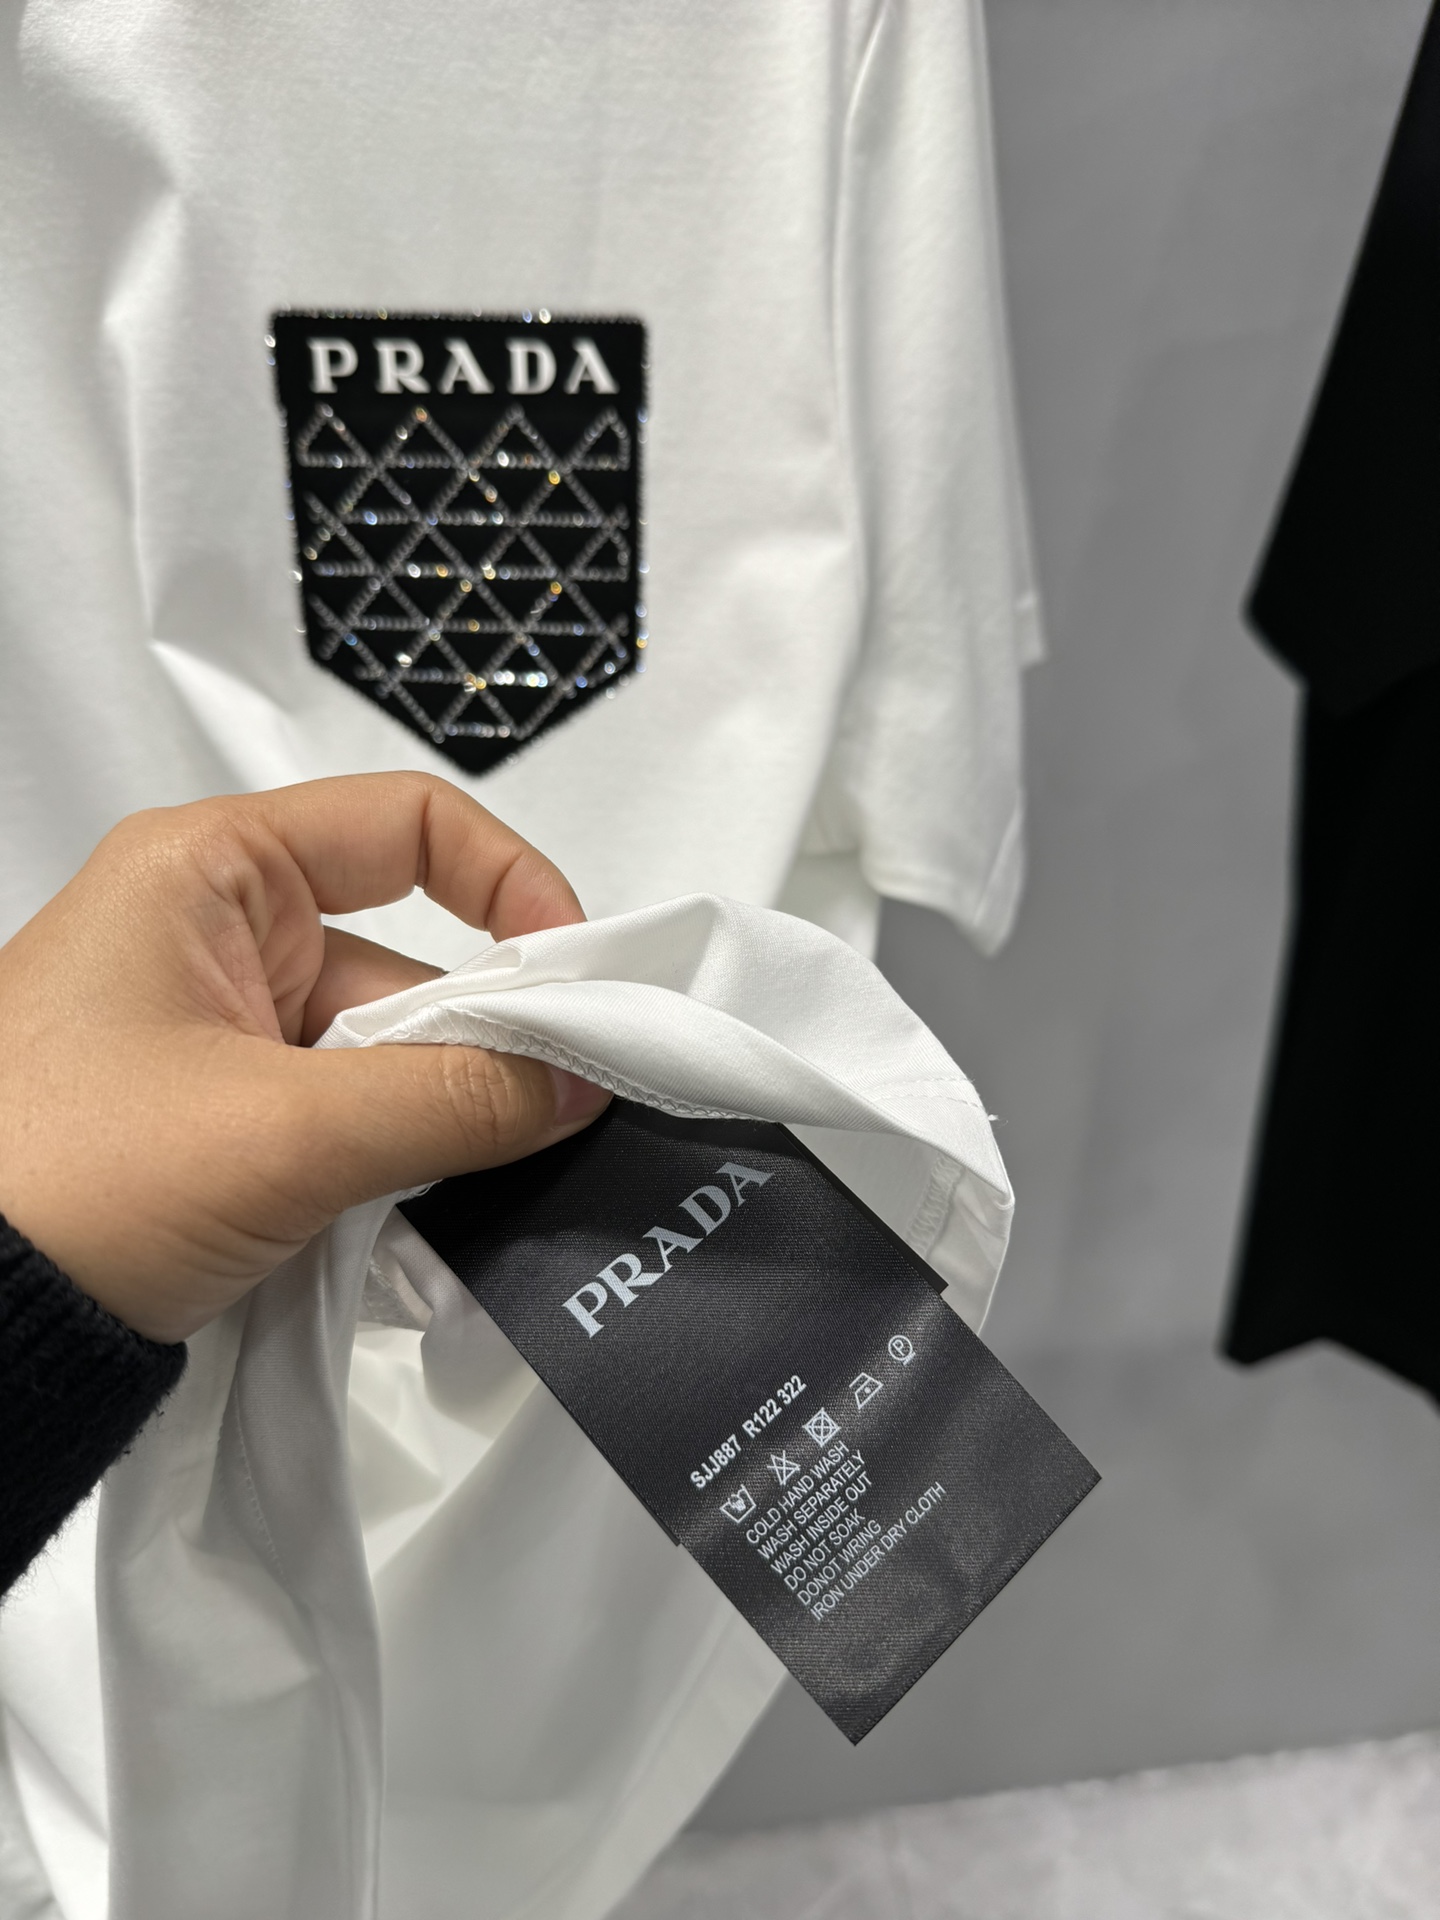 ️PRAD*普拉*达24春夏男士圆领短袖.简单高级胸口口袋设计感.凸凹造型经典Prada标识及品牌形象.